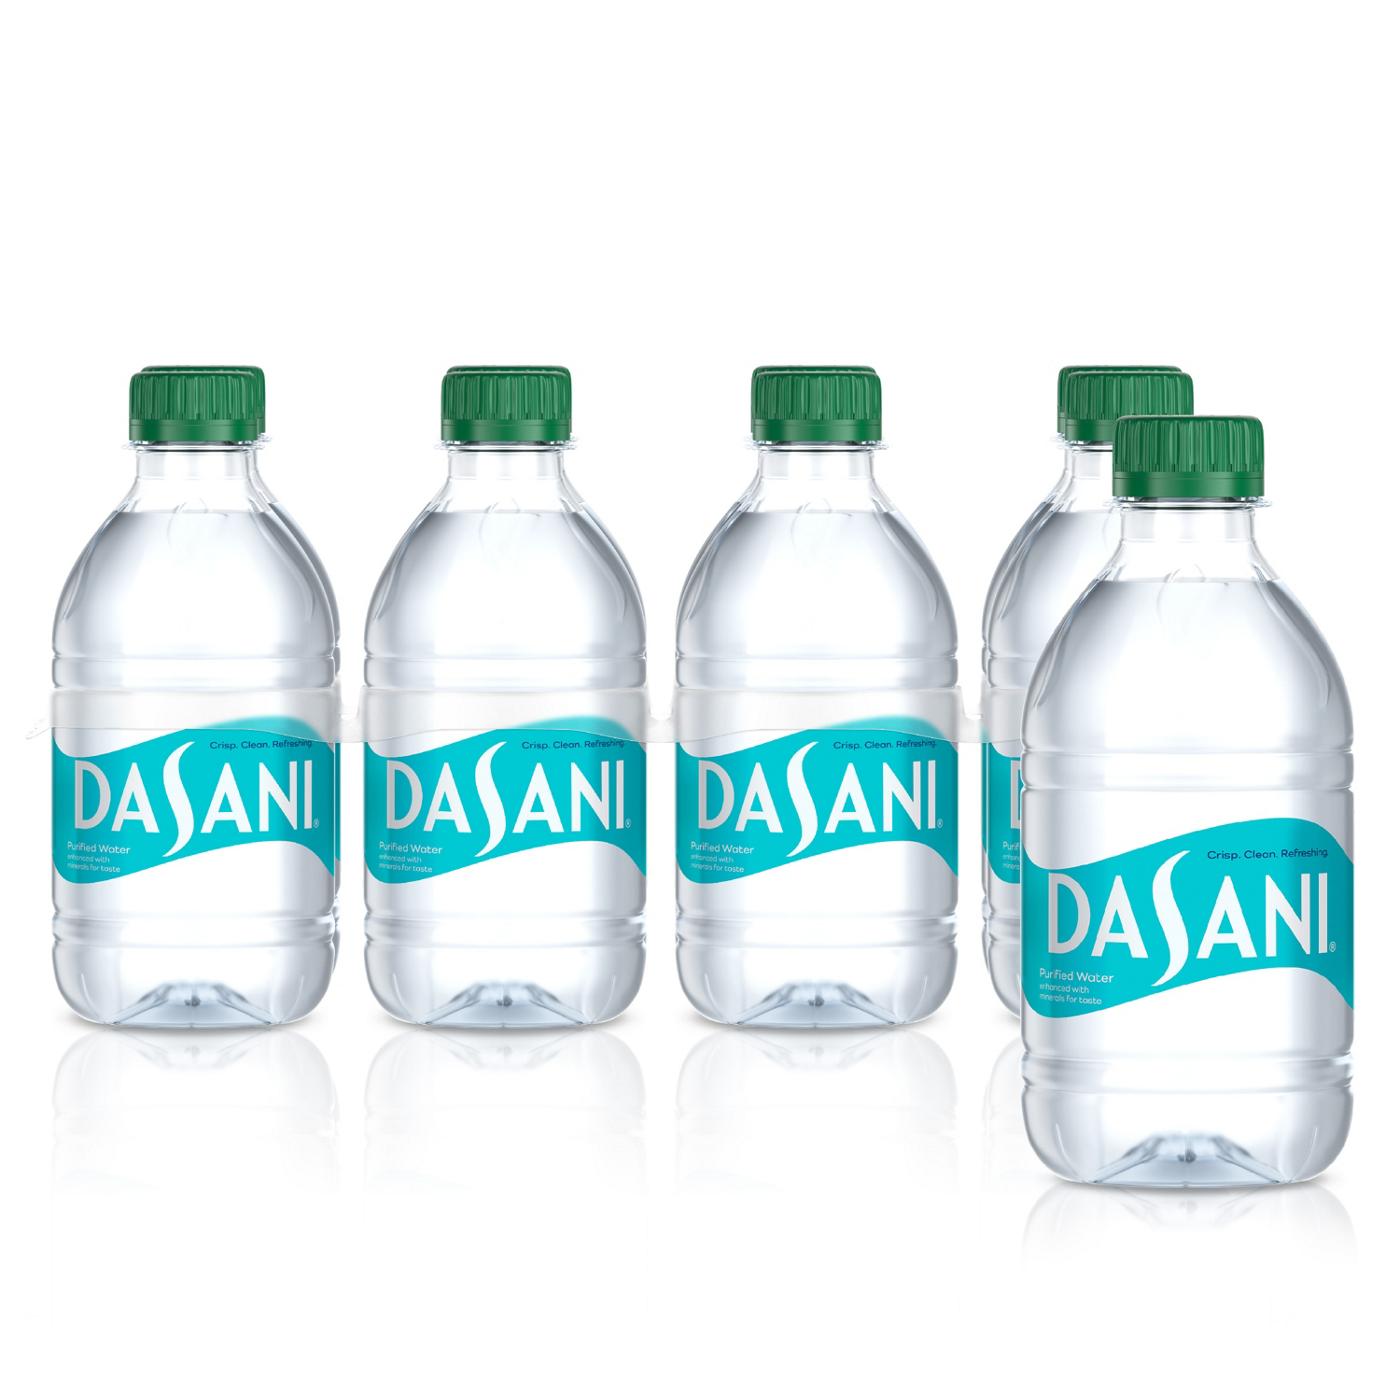 DASANI Purified Water Bottles Enhanced with Minerals, 16.9 fl oz